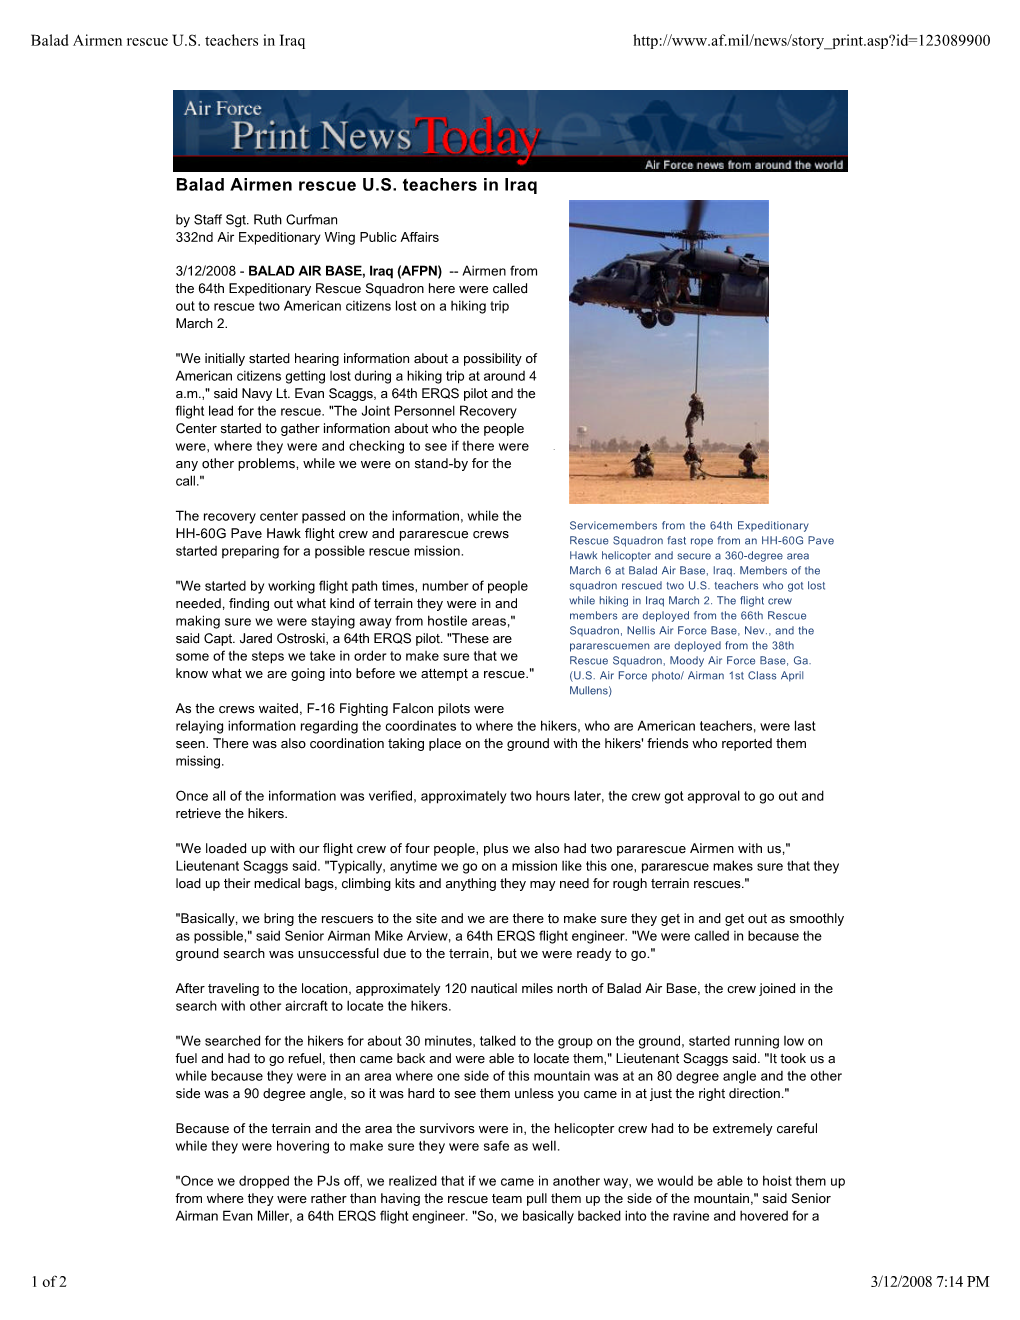 Balad Airmen Rescue US Teachers in Iraq